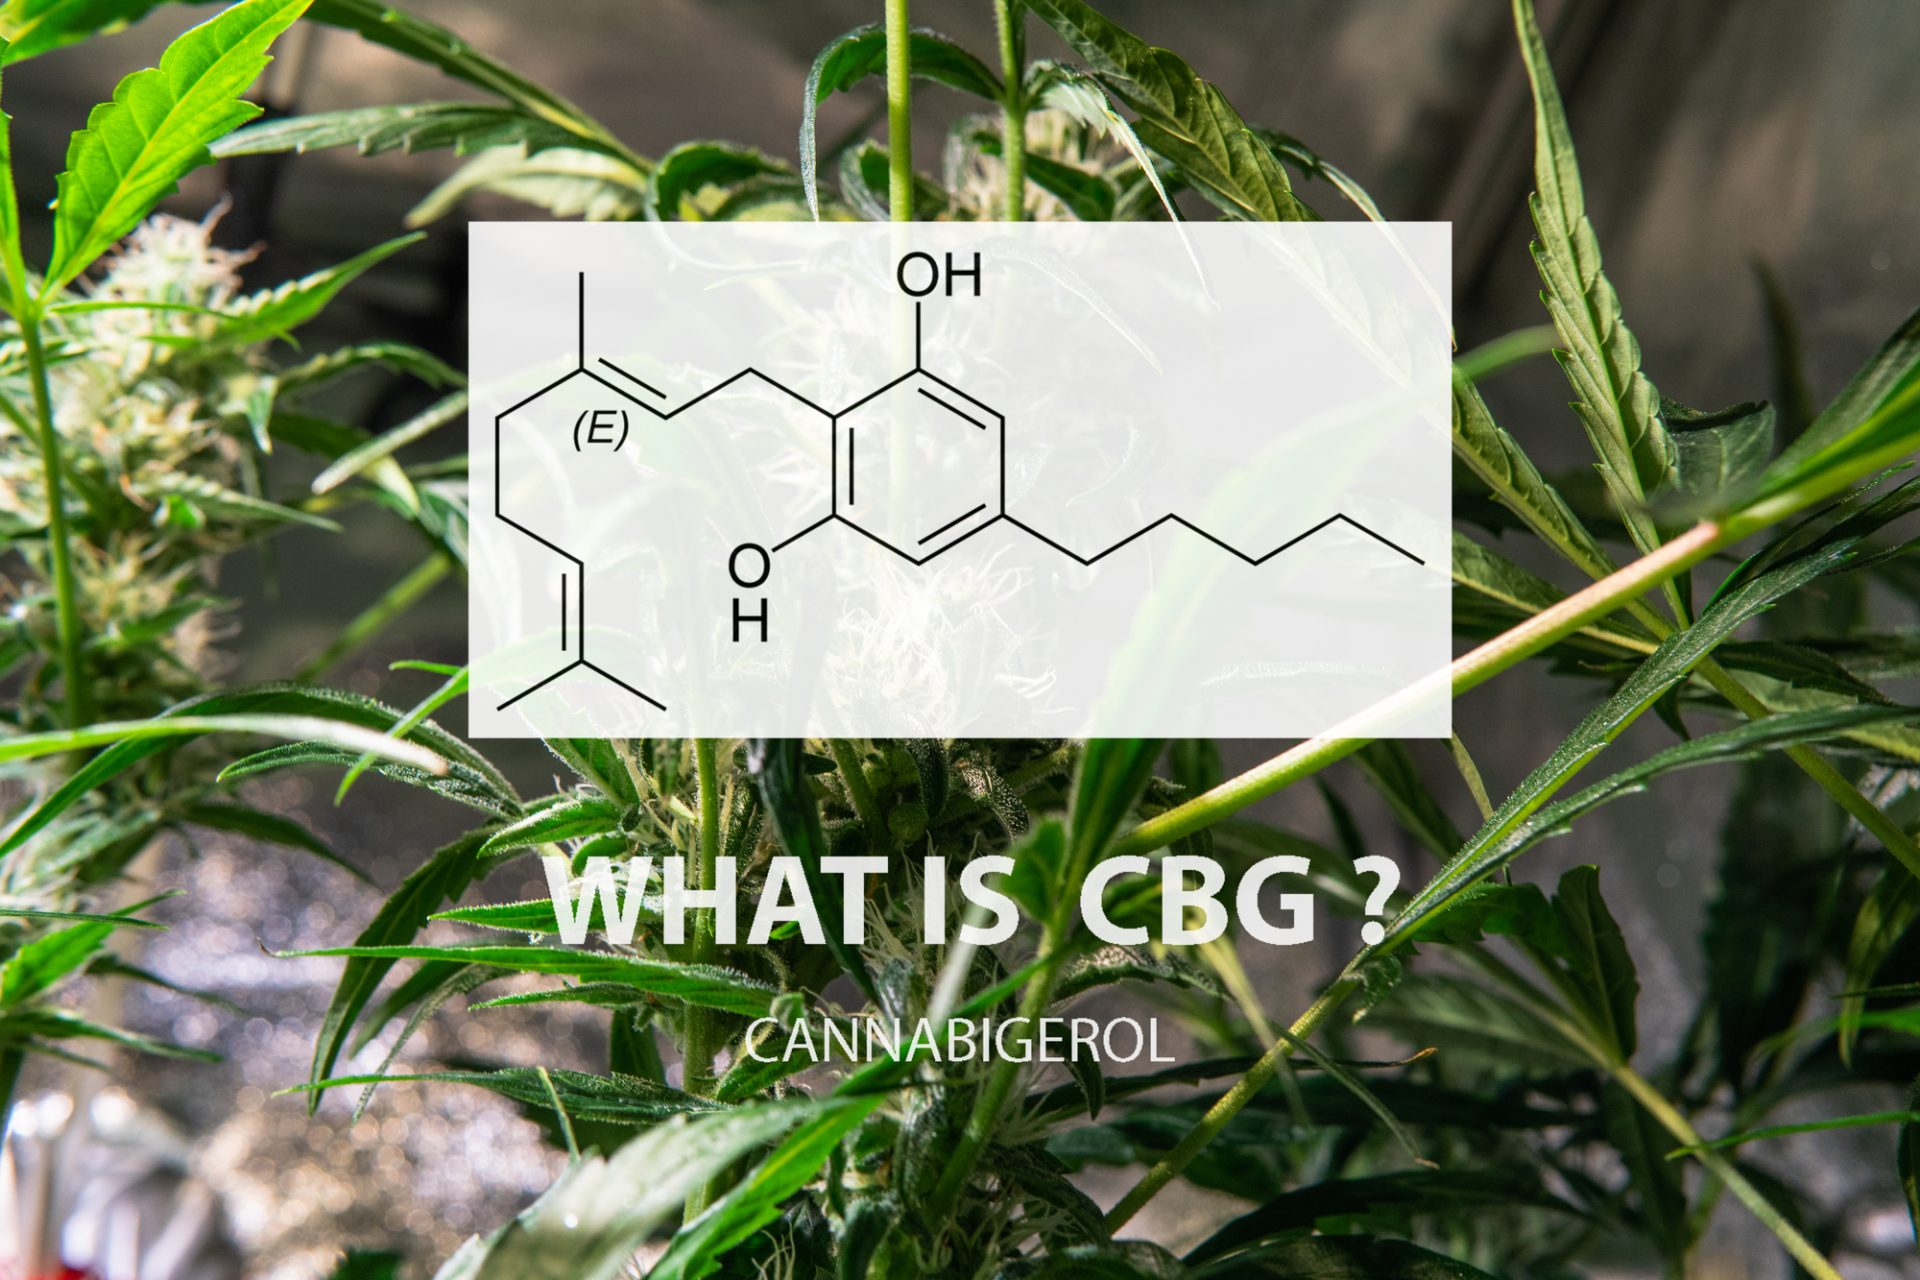 Cannabigerol cannabinoid cannabis plant.